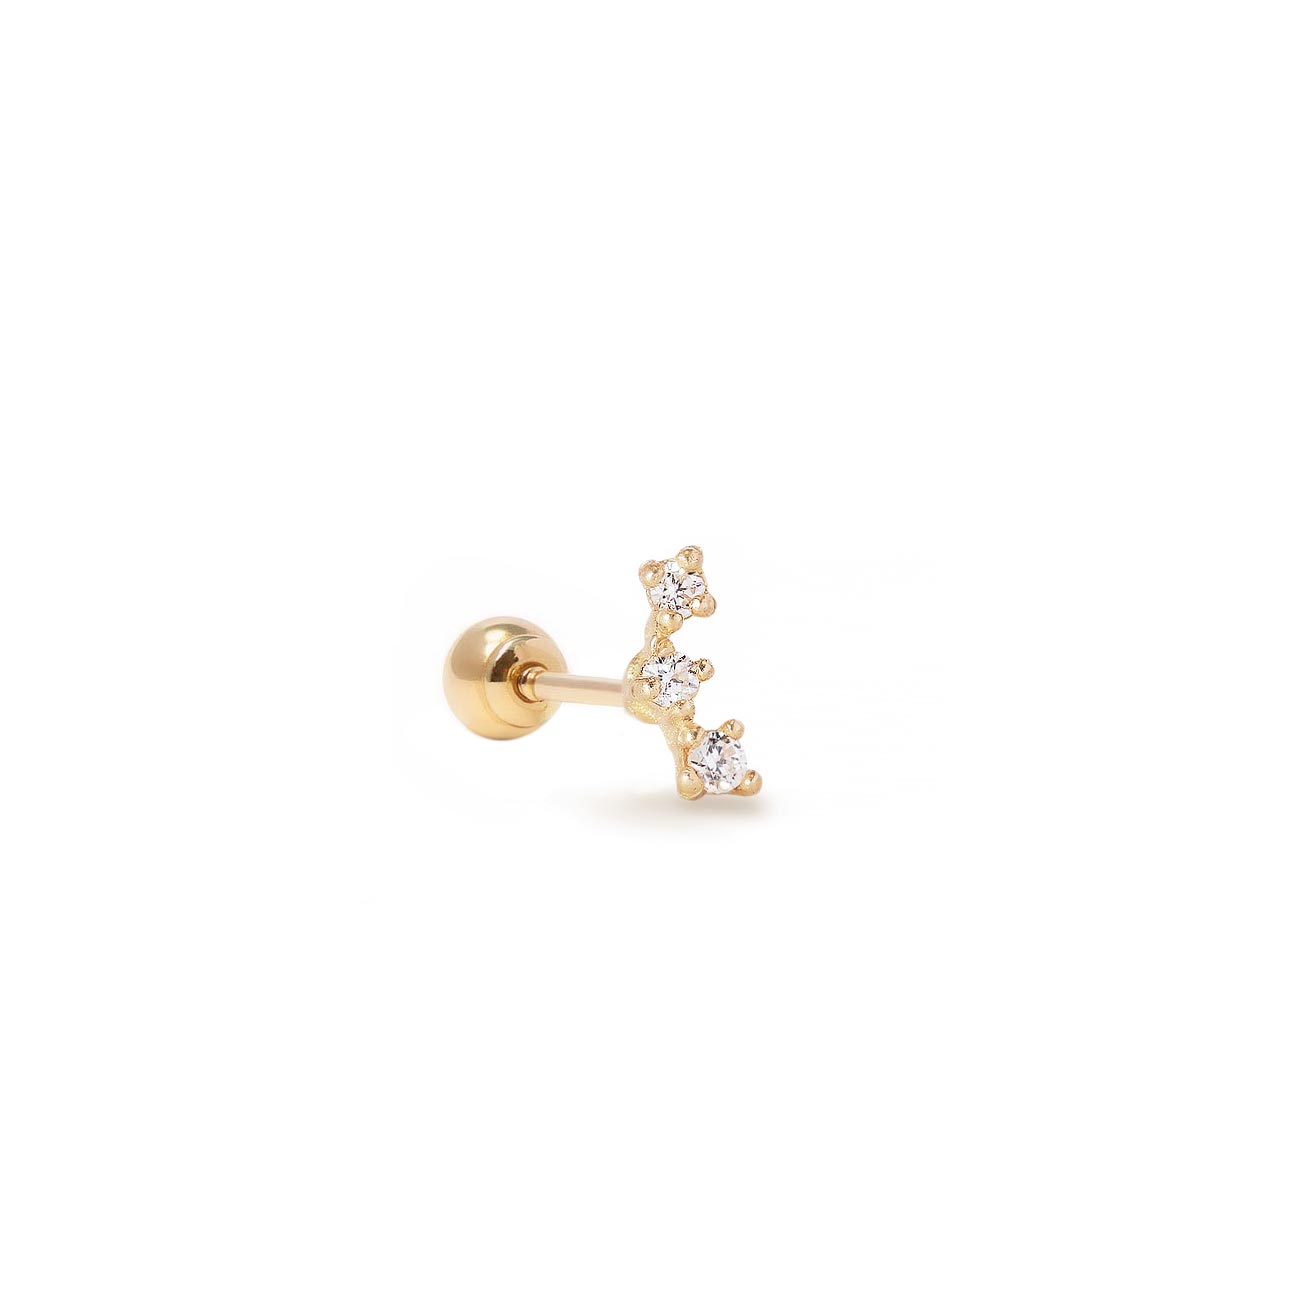 Tiny Gold Stud Earrings Set, Helix Cartilage Piercing – AMYO Jewelry